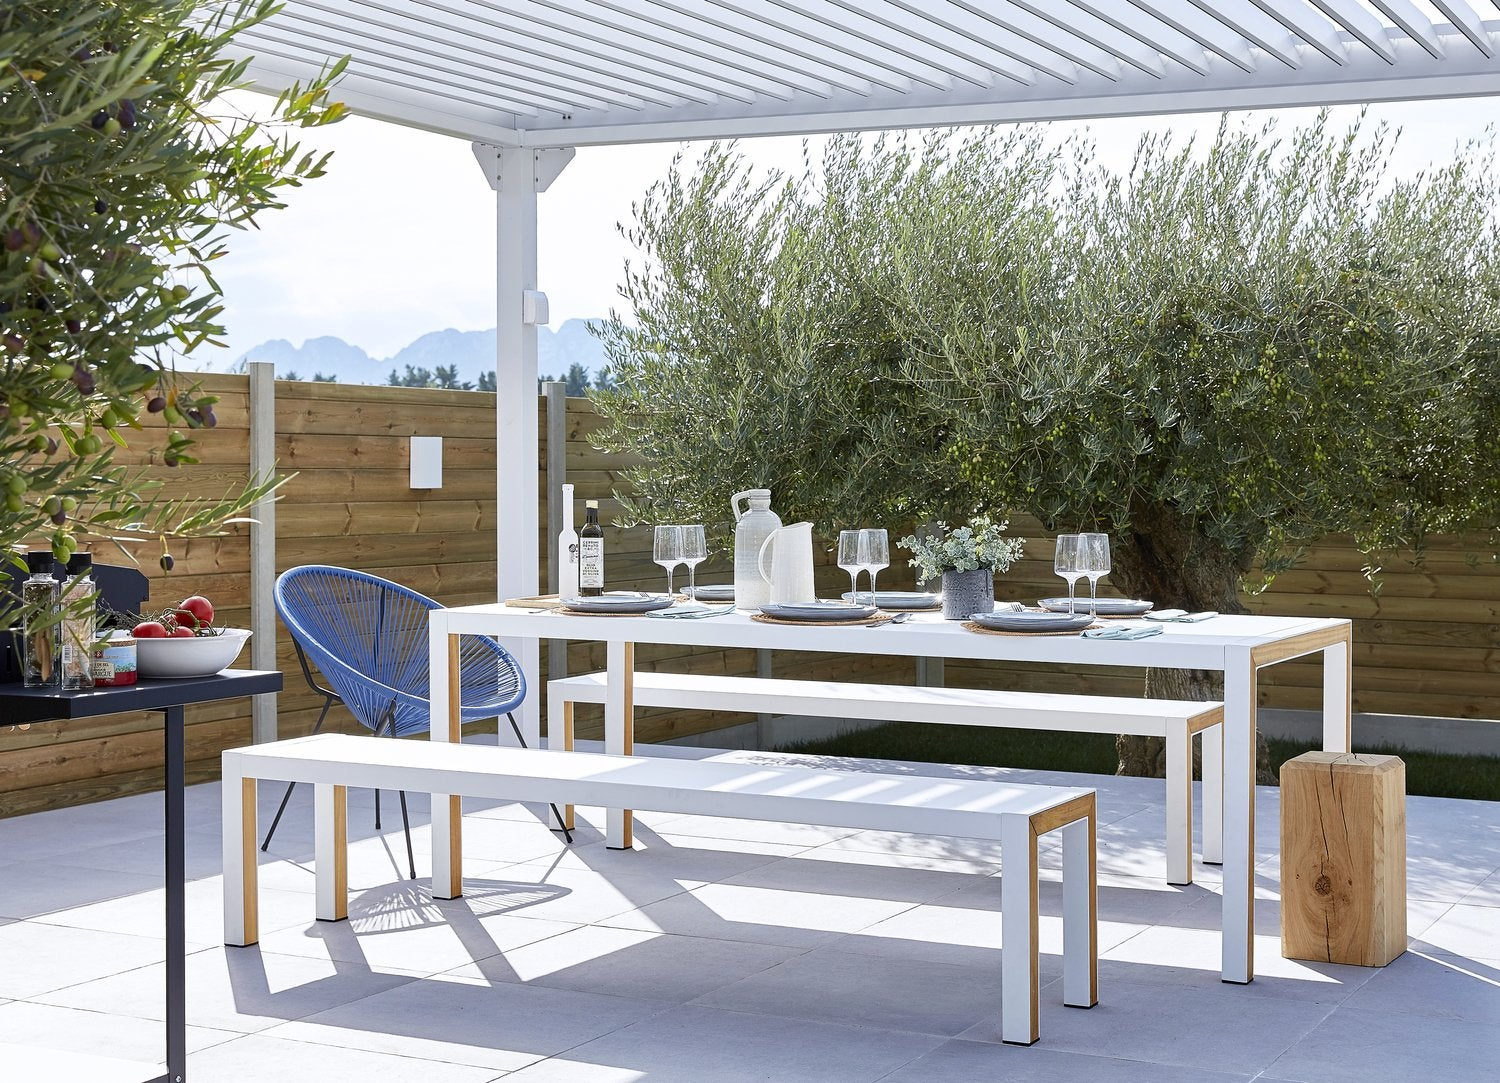 La Nouvelle Collection De Salon De Jardin 2020 | Leroy Merlin dedans Petite Table De Salon De Jardin